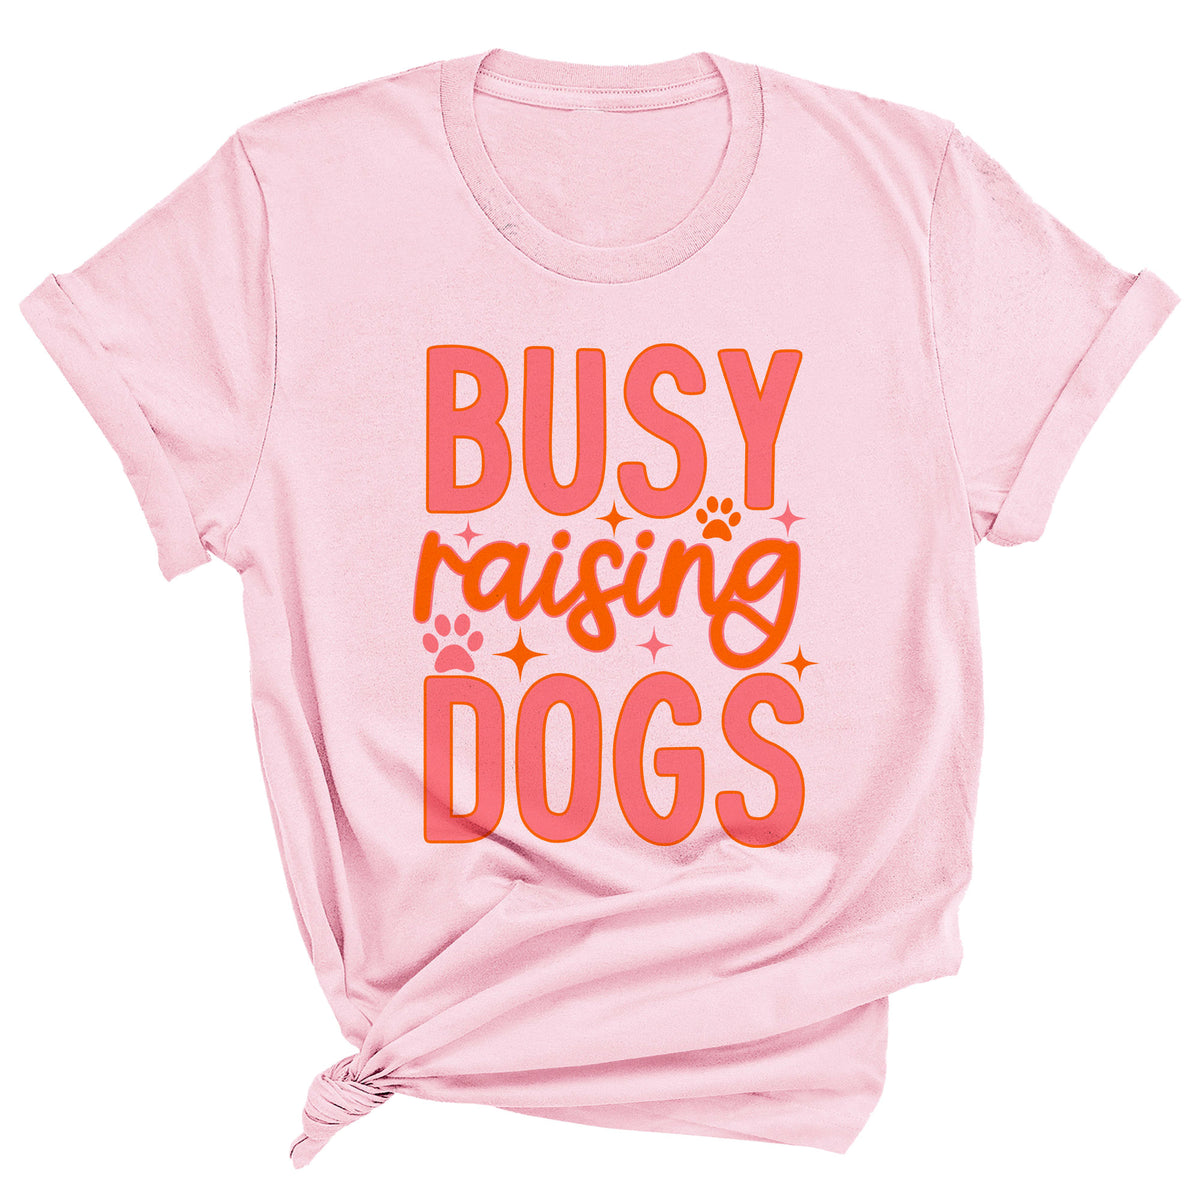 Busy Raising Dogs Unisex T-Shirt